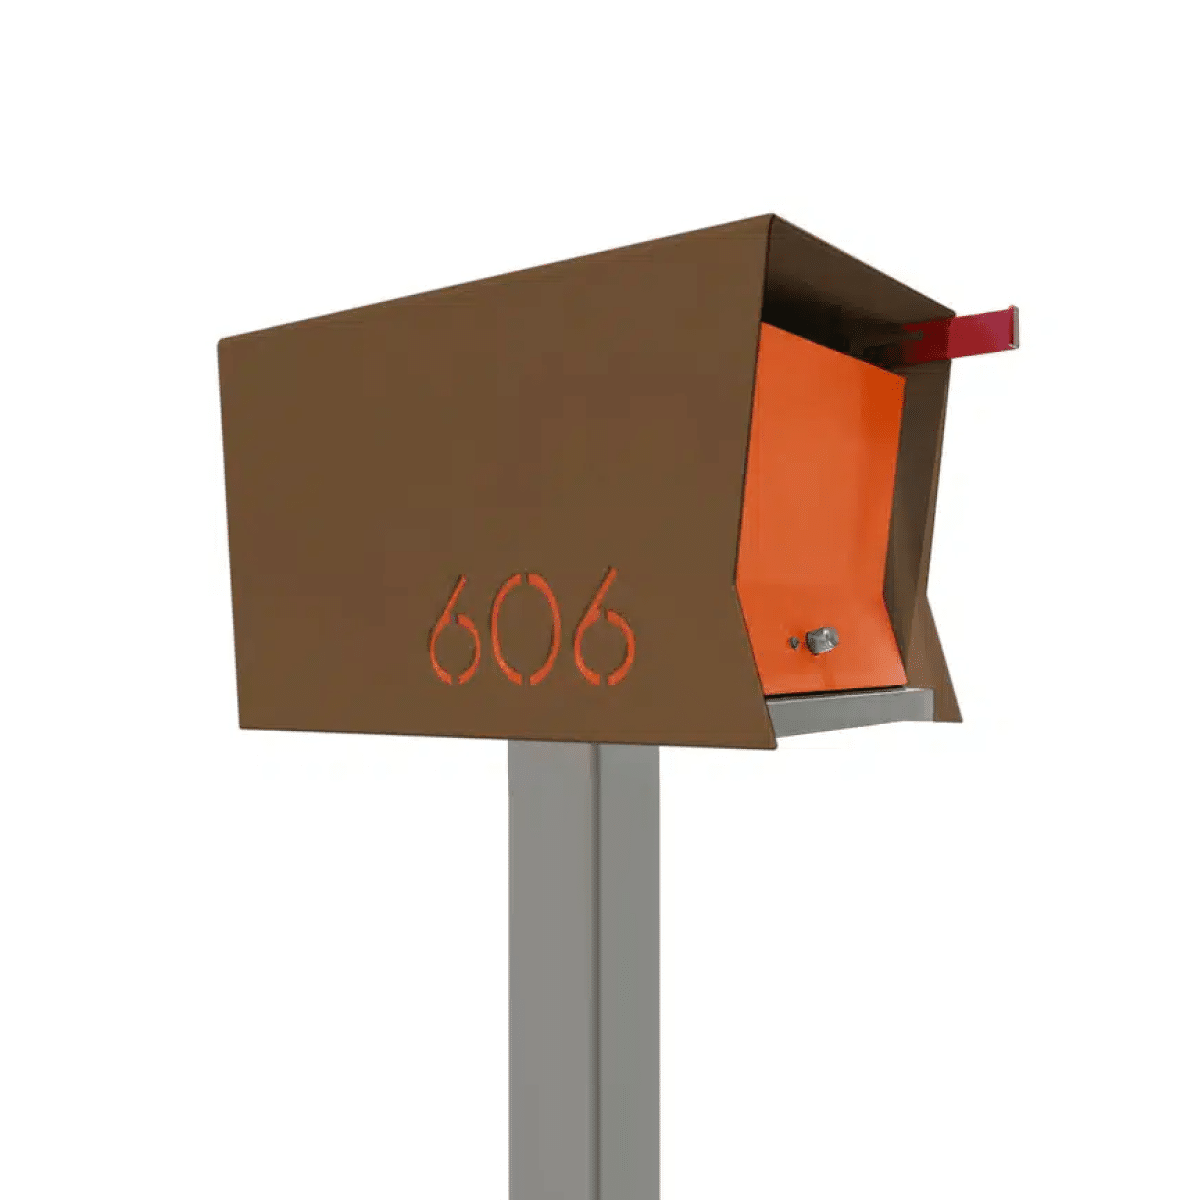 The Original Retrobox in Coconut – Modern Mailbox Product Image